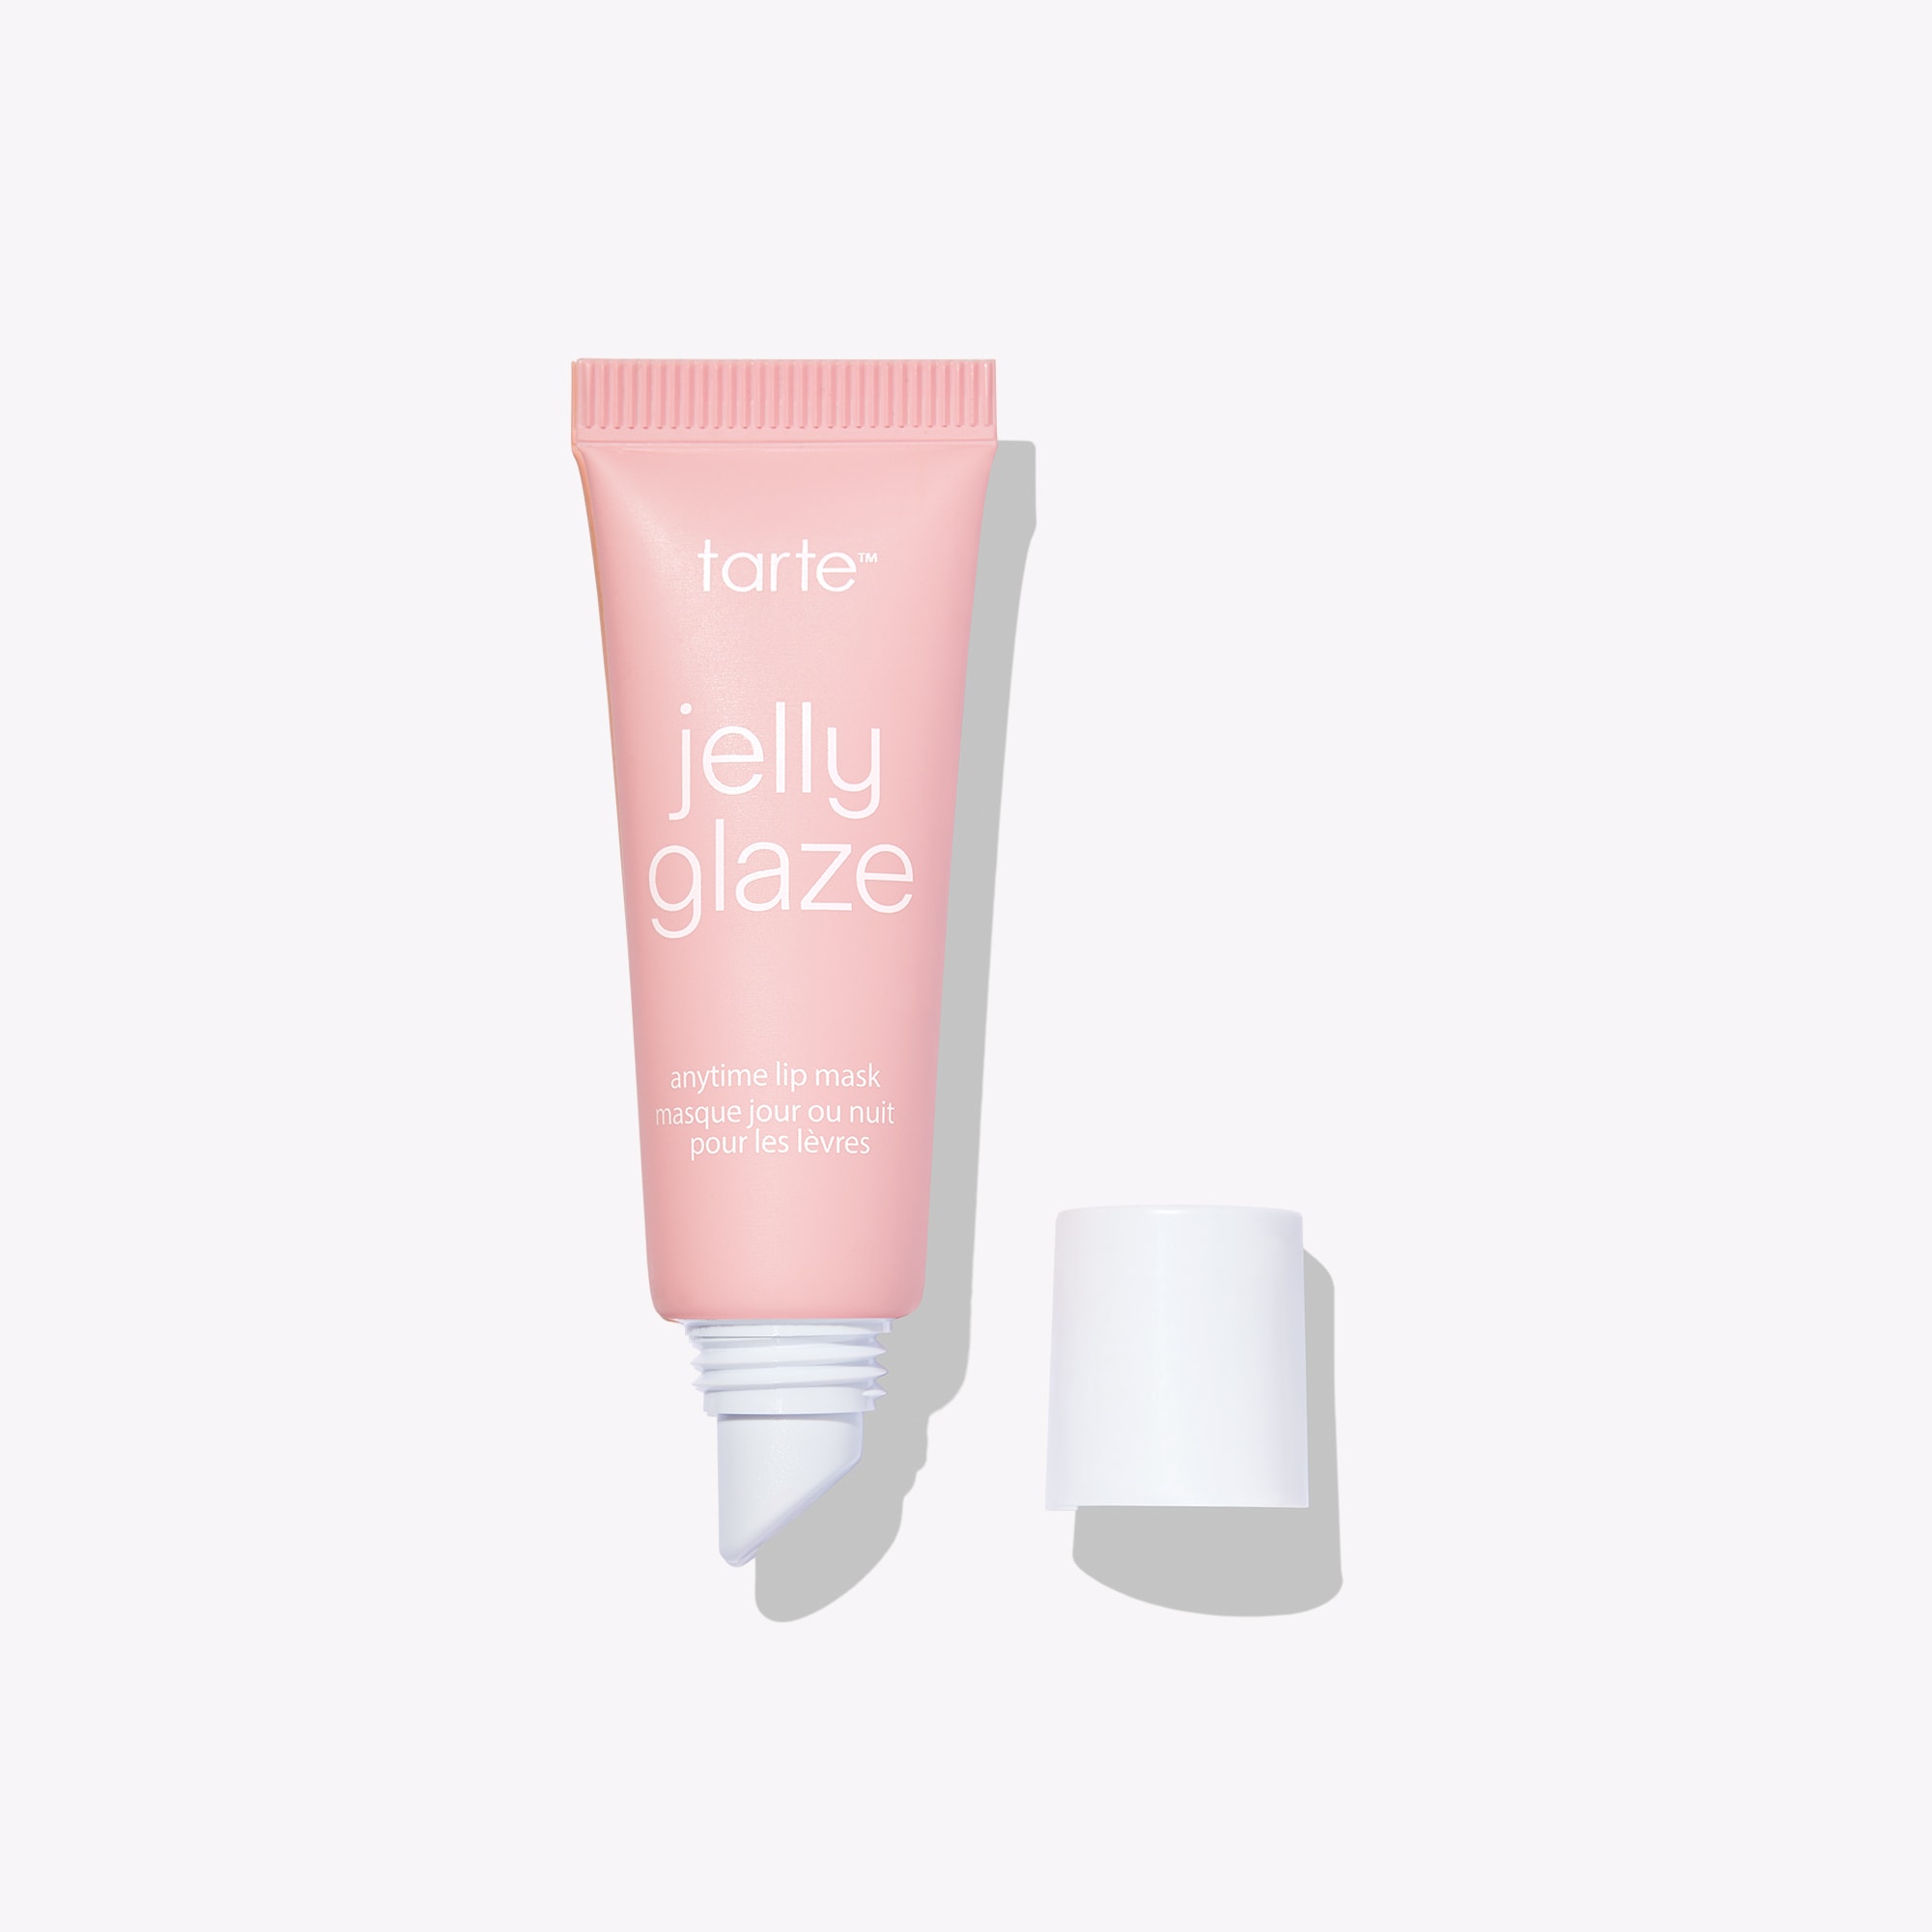 jelly glaze anytime lip mask | tarte cosmetics